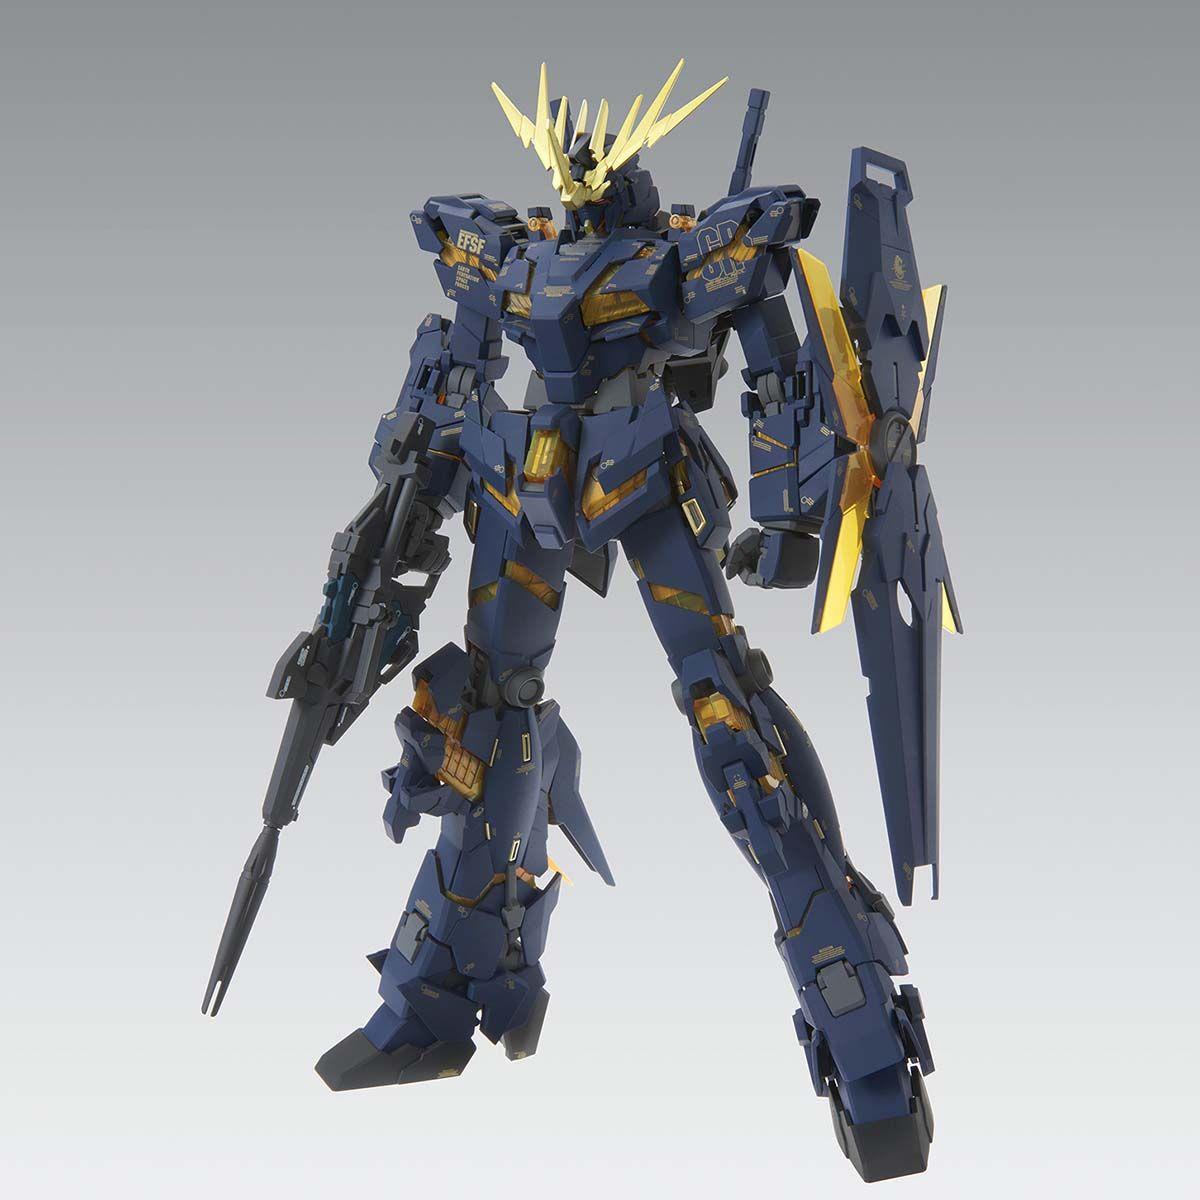 Gundam: Unicorn Gundam 02 Banshee Ver. Ka MG Model